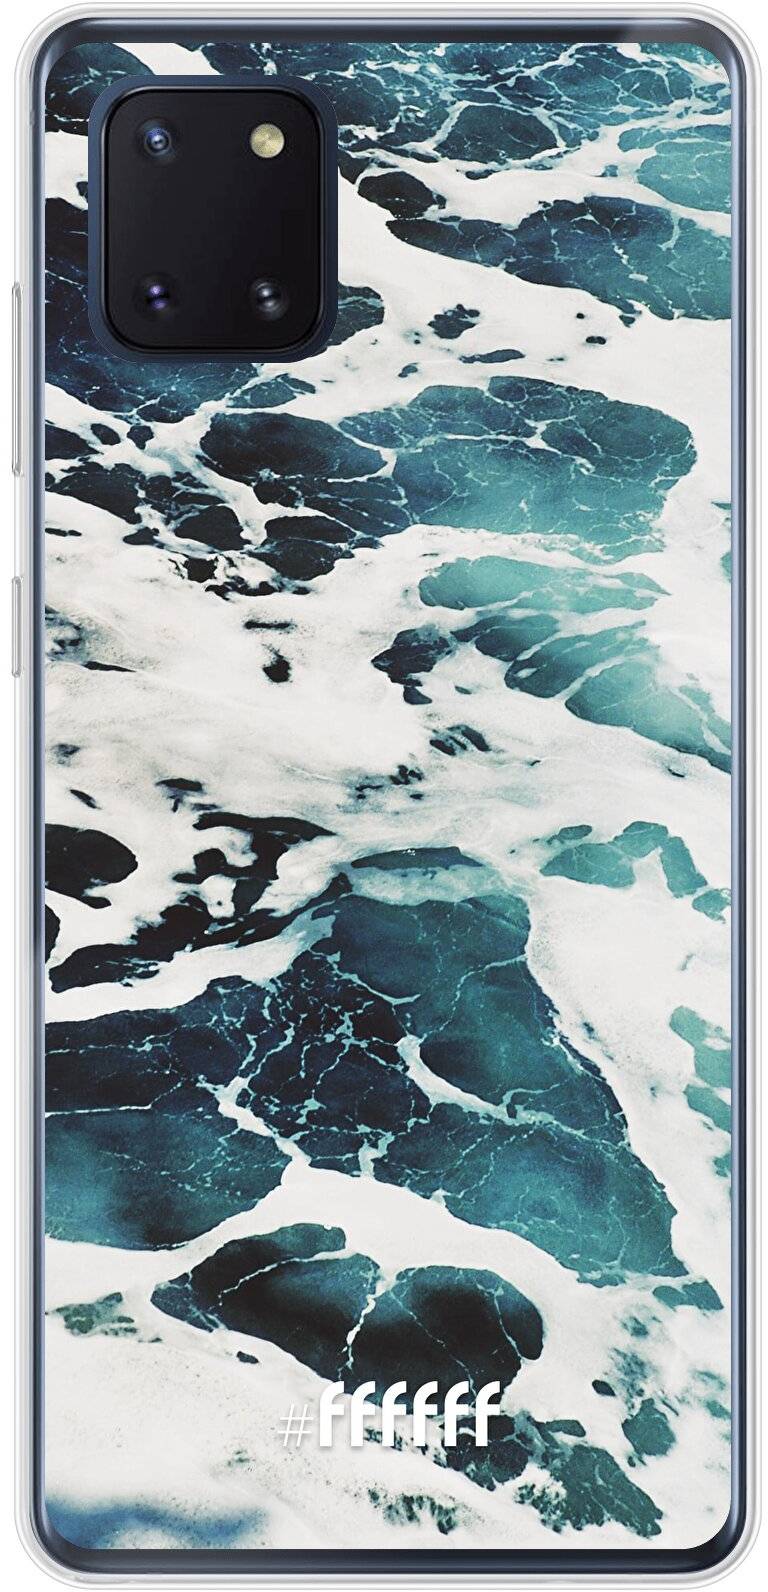 Waves Galaxy Note 10 Lite